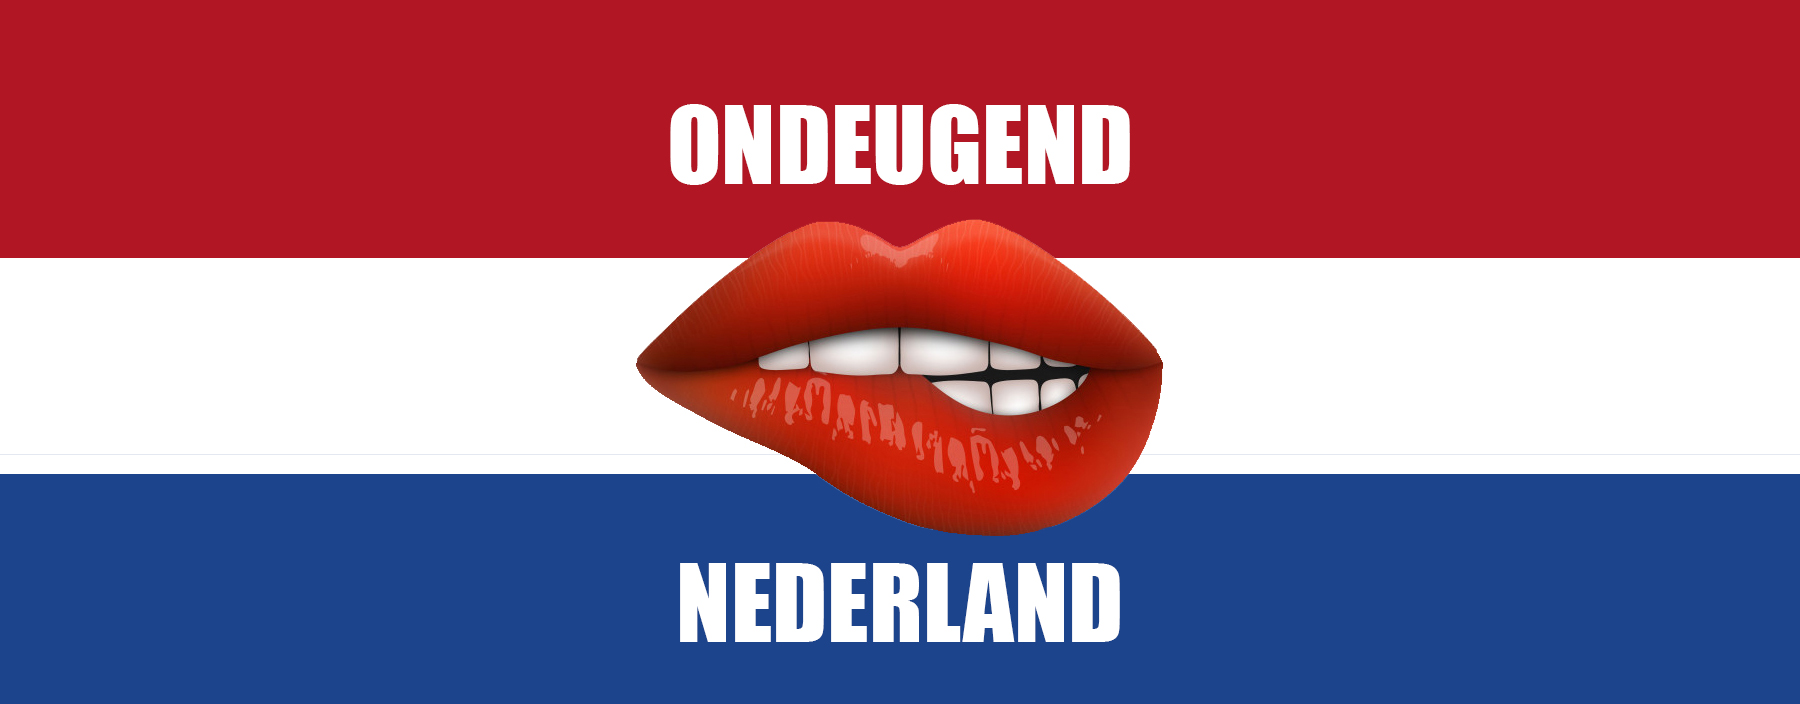 Ondeugend Nederland